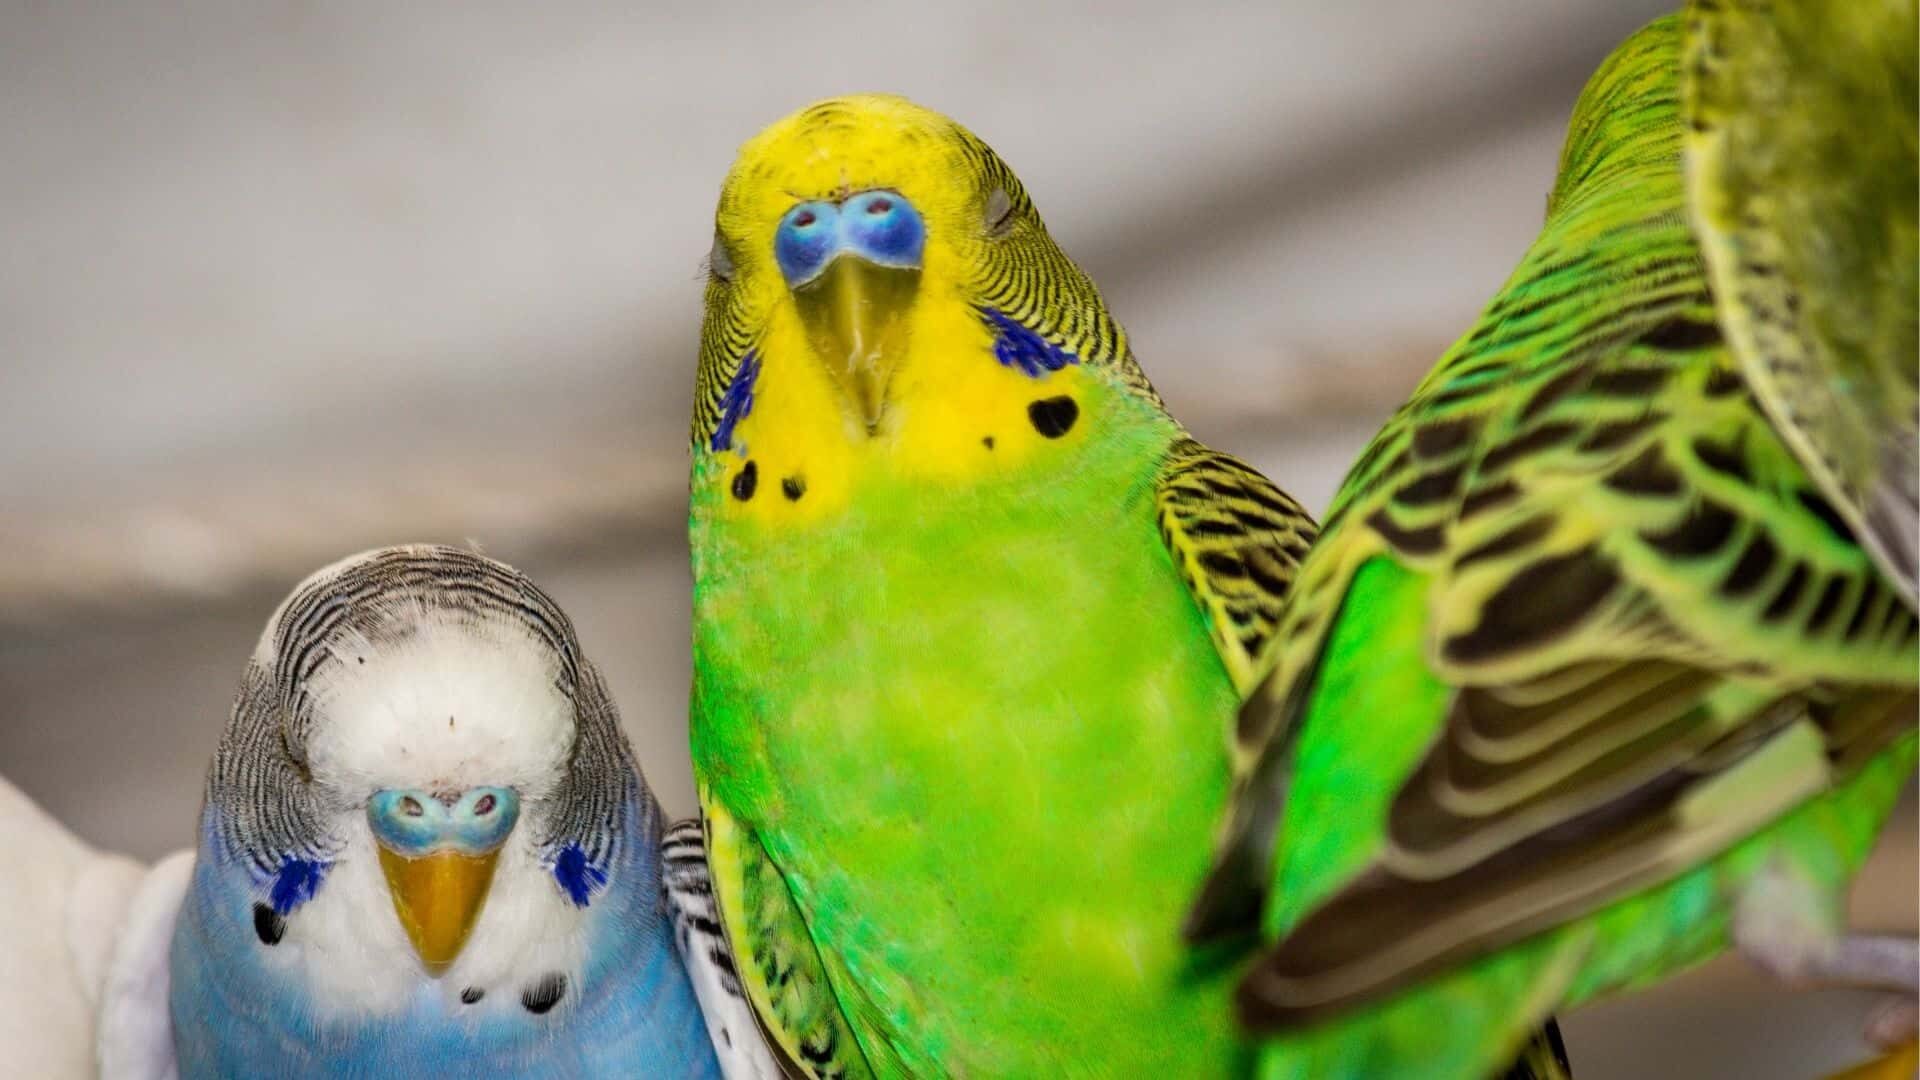 Do birds like being pet?